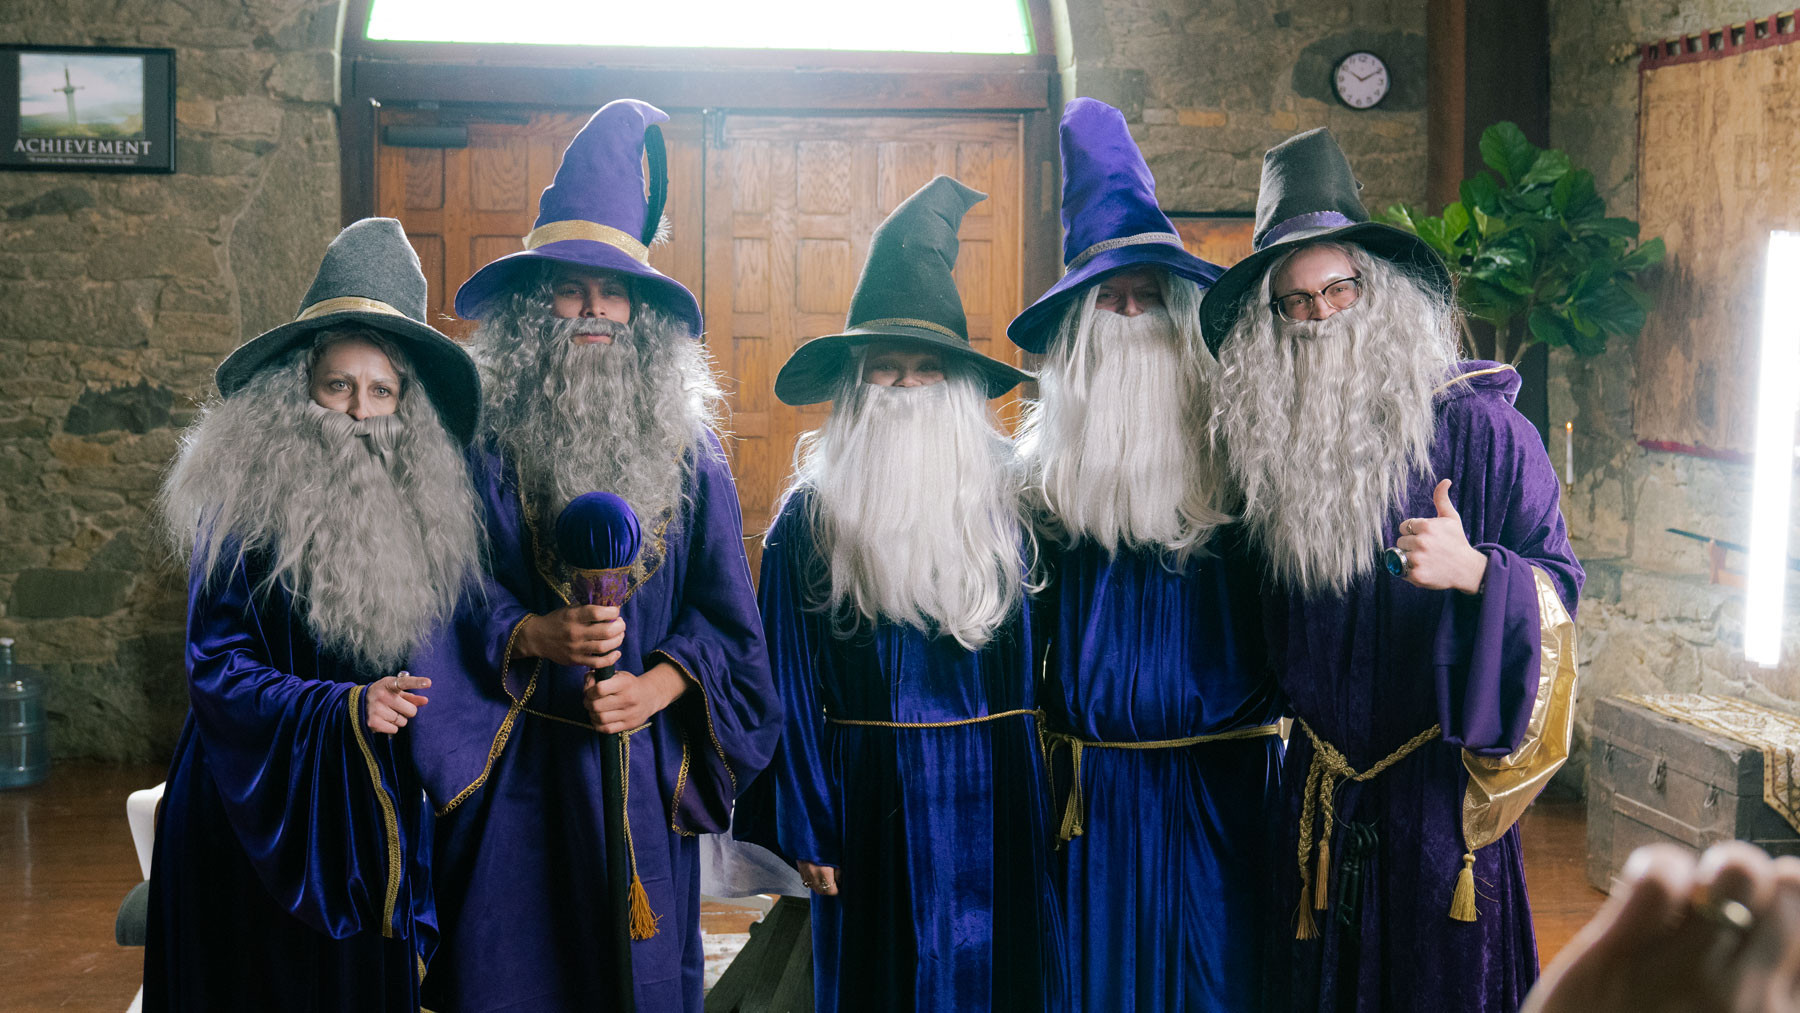  Five actors dressed as wizards